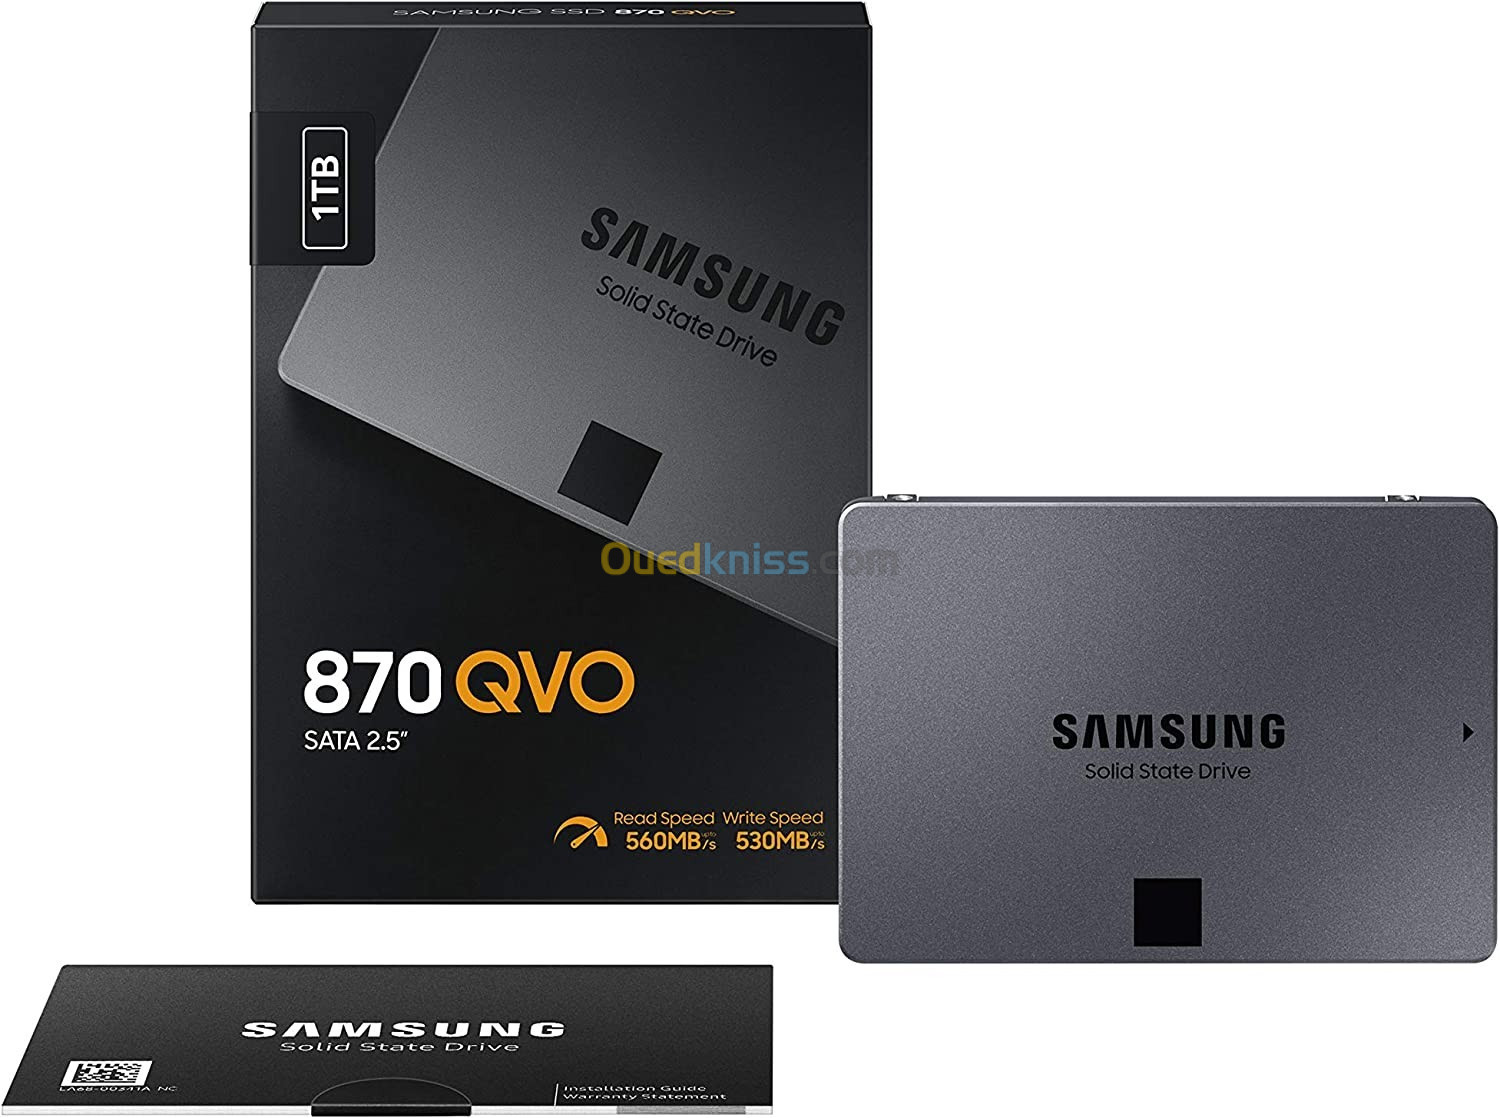 Disque dur 1To SSD Samsung 860 QVO